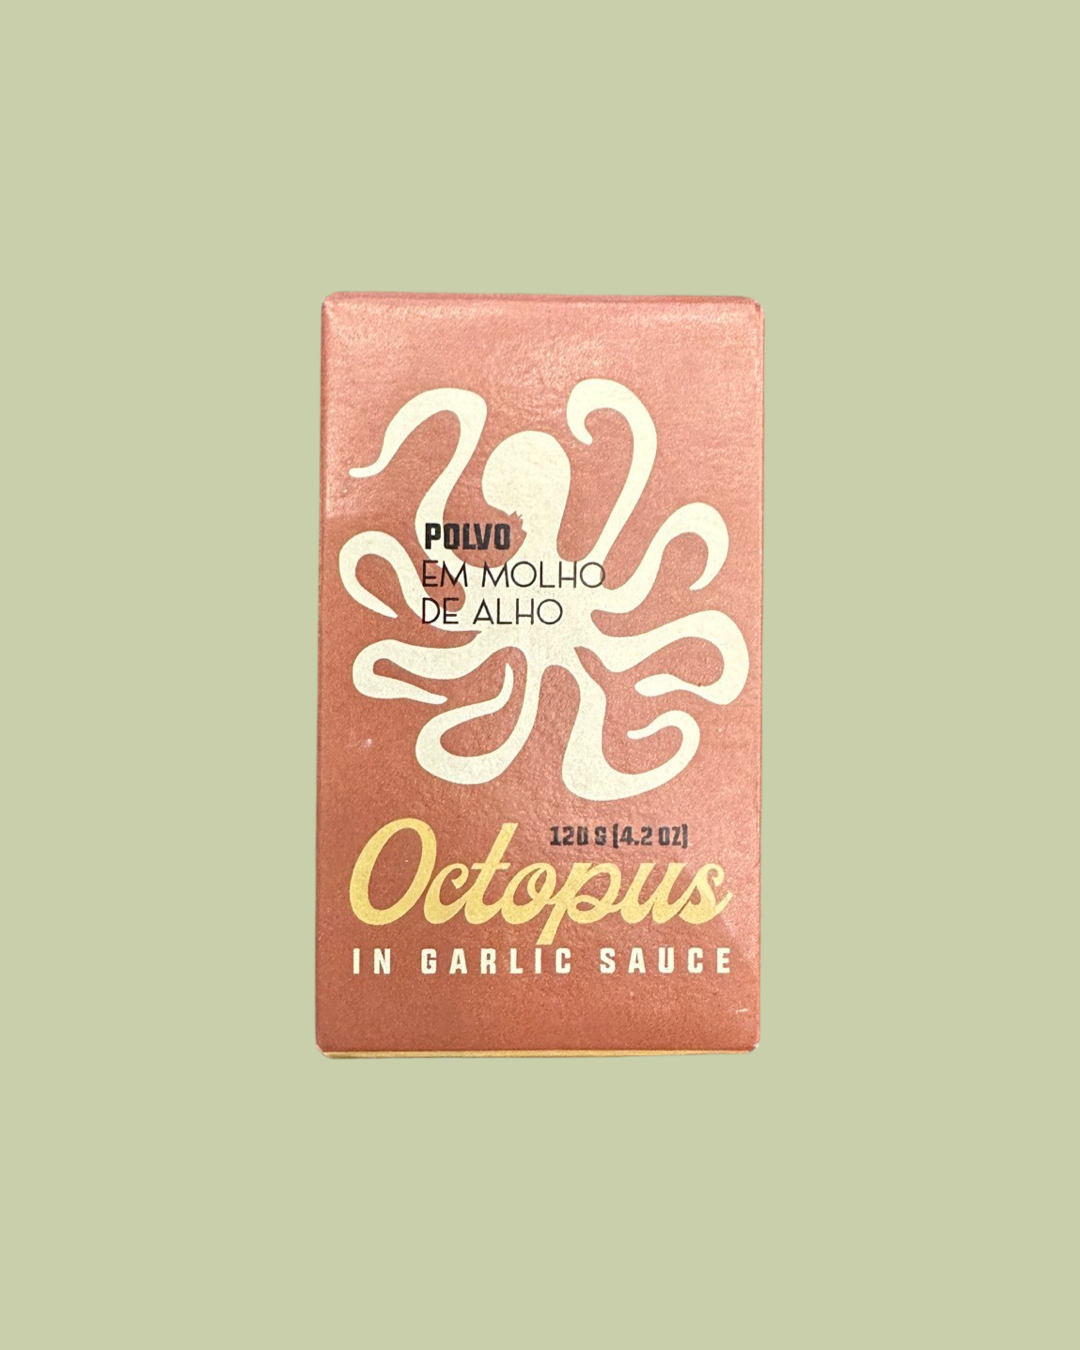 Octopus in Garlic Sauce